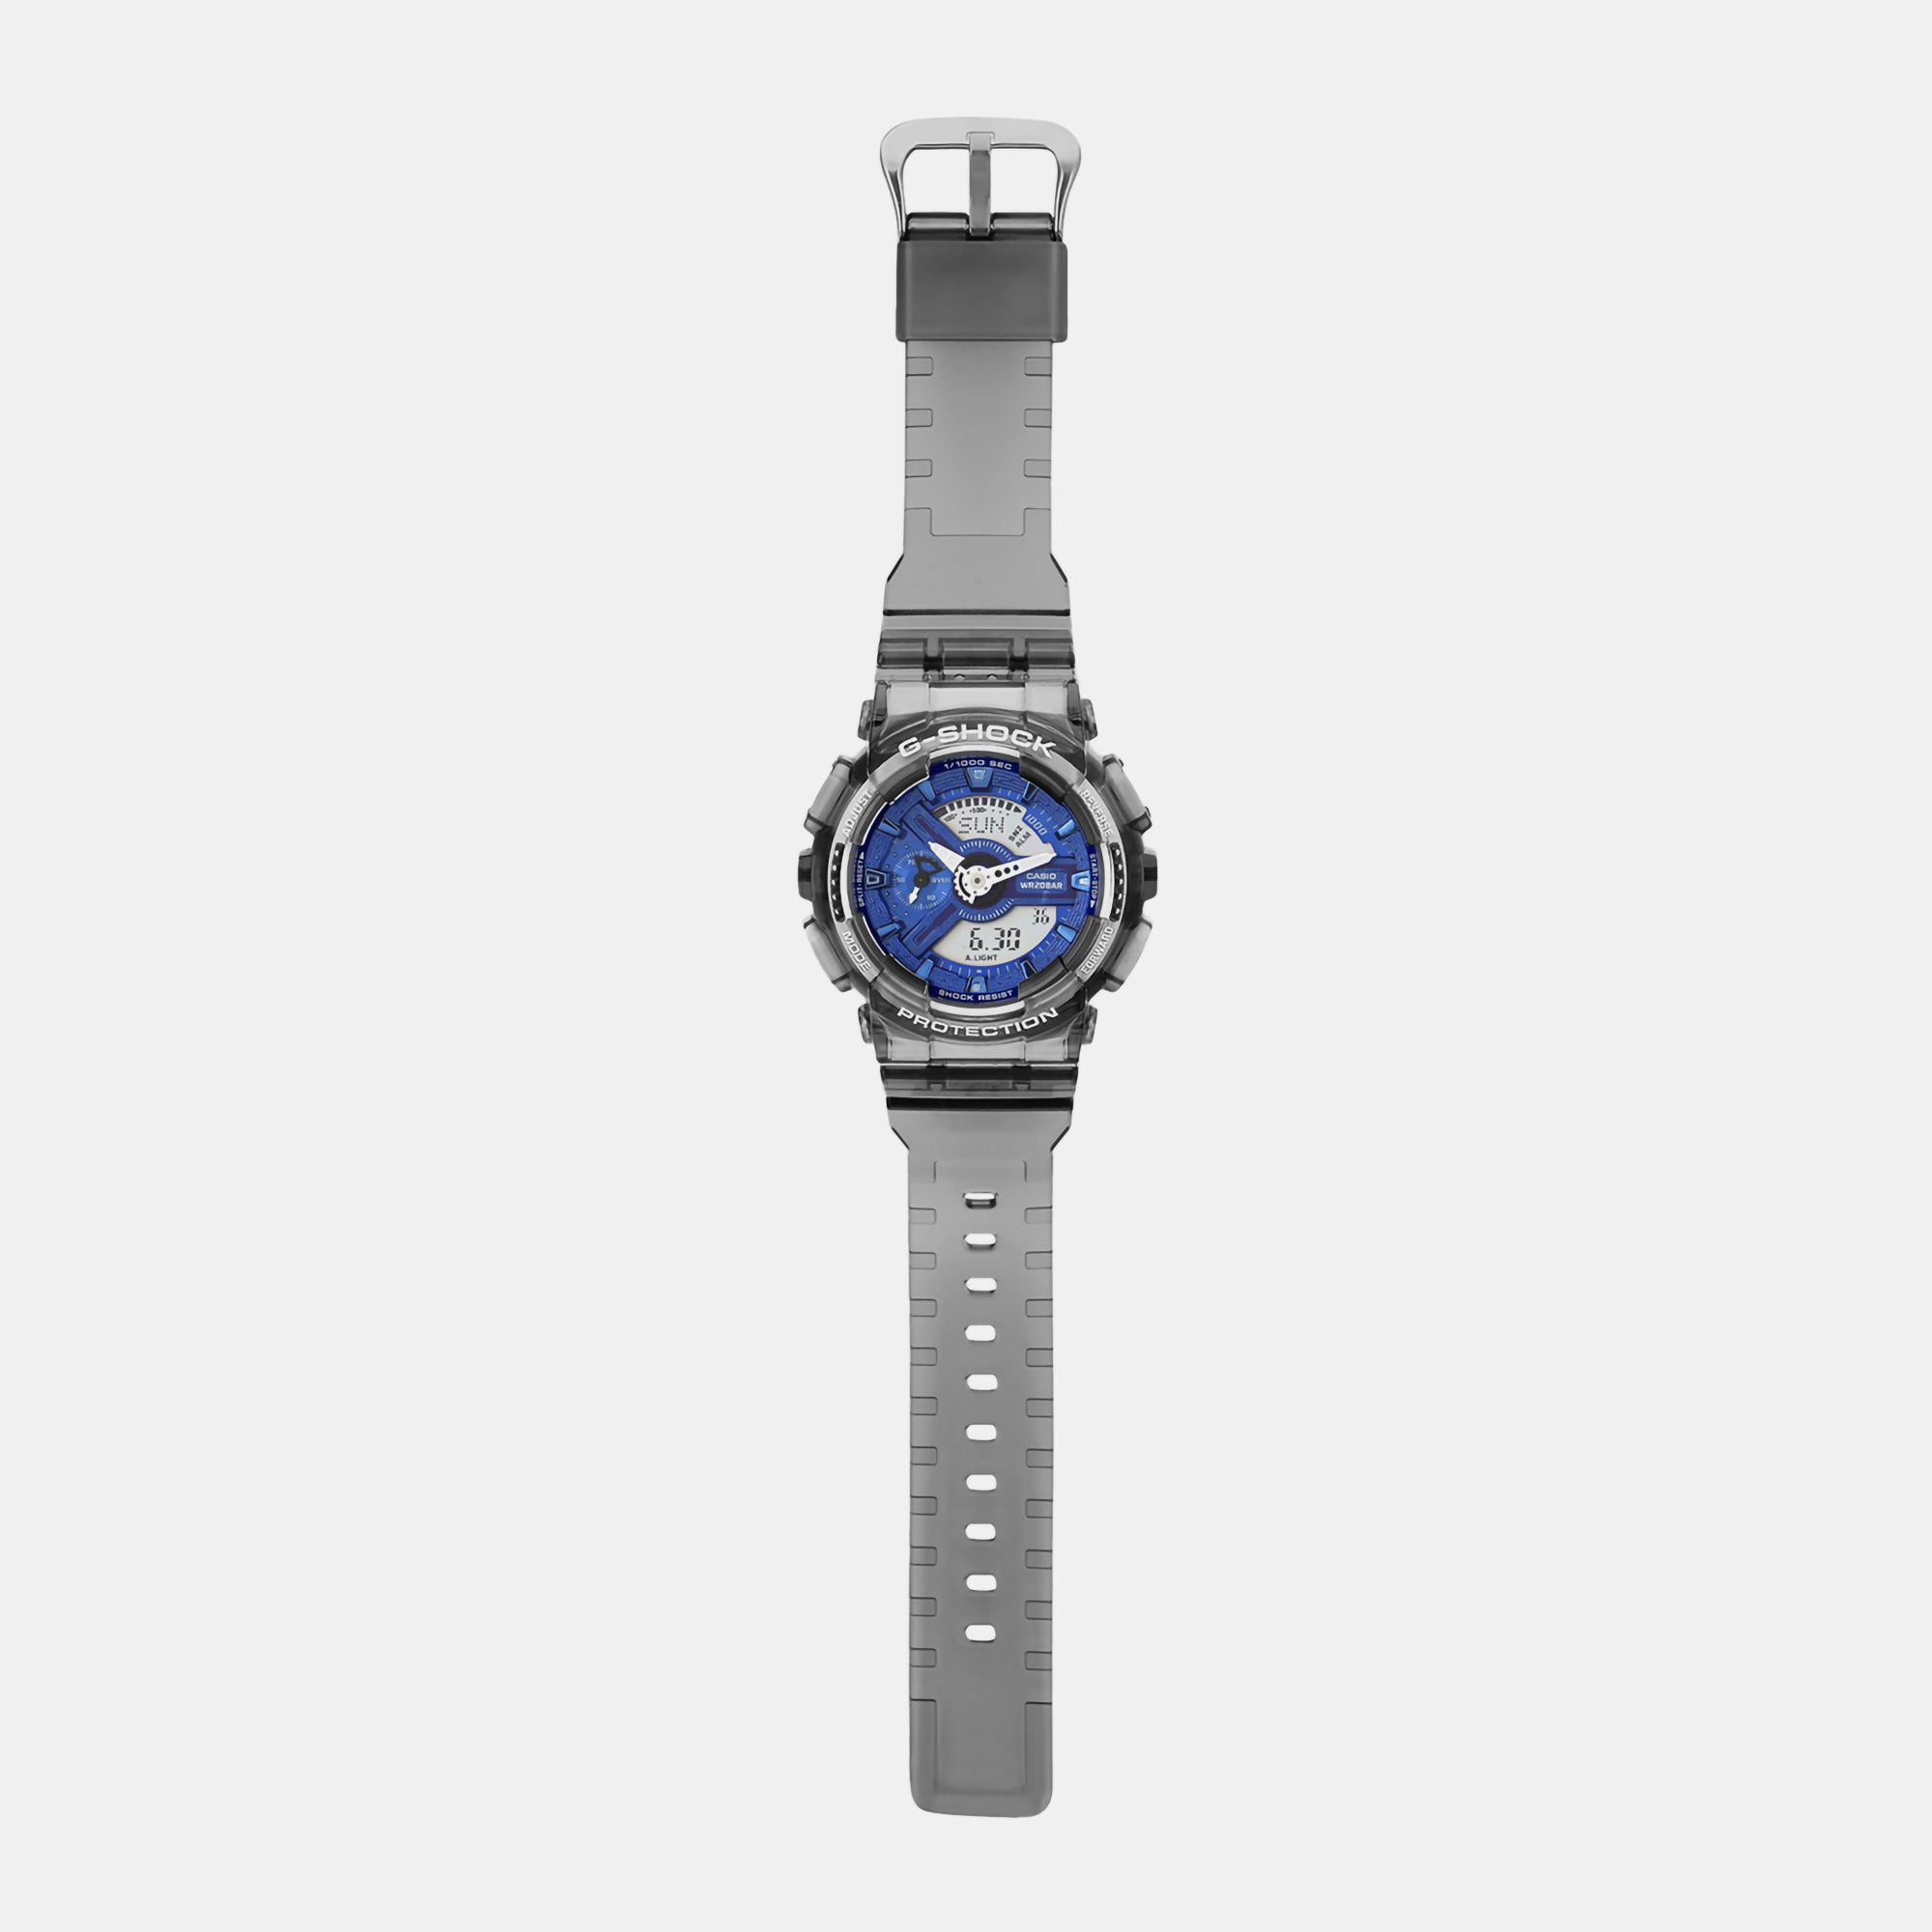 Casio women's Analog-Digital Round Dial Quartz Gray Watch G1378 